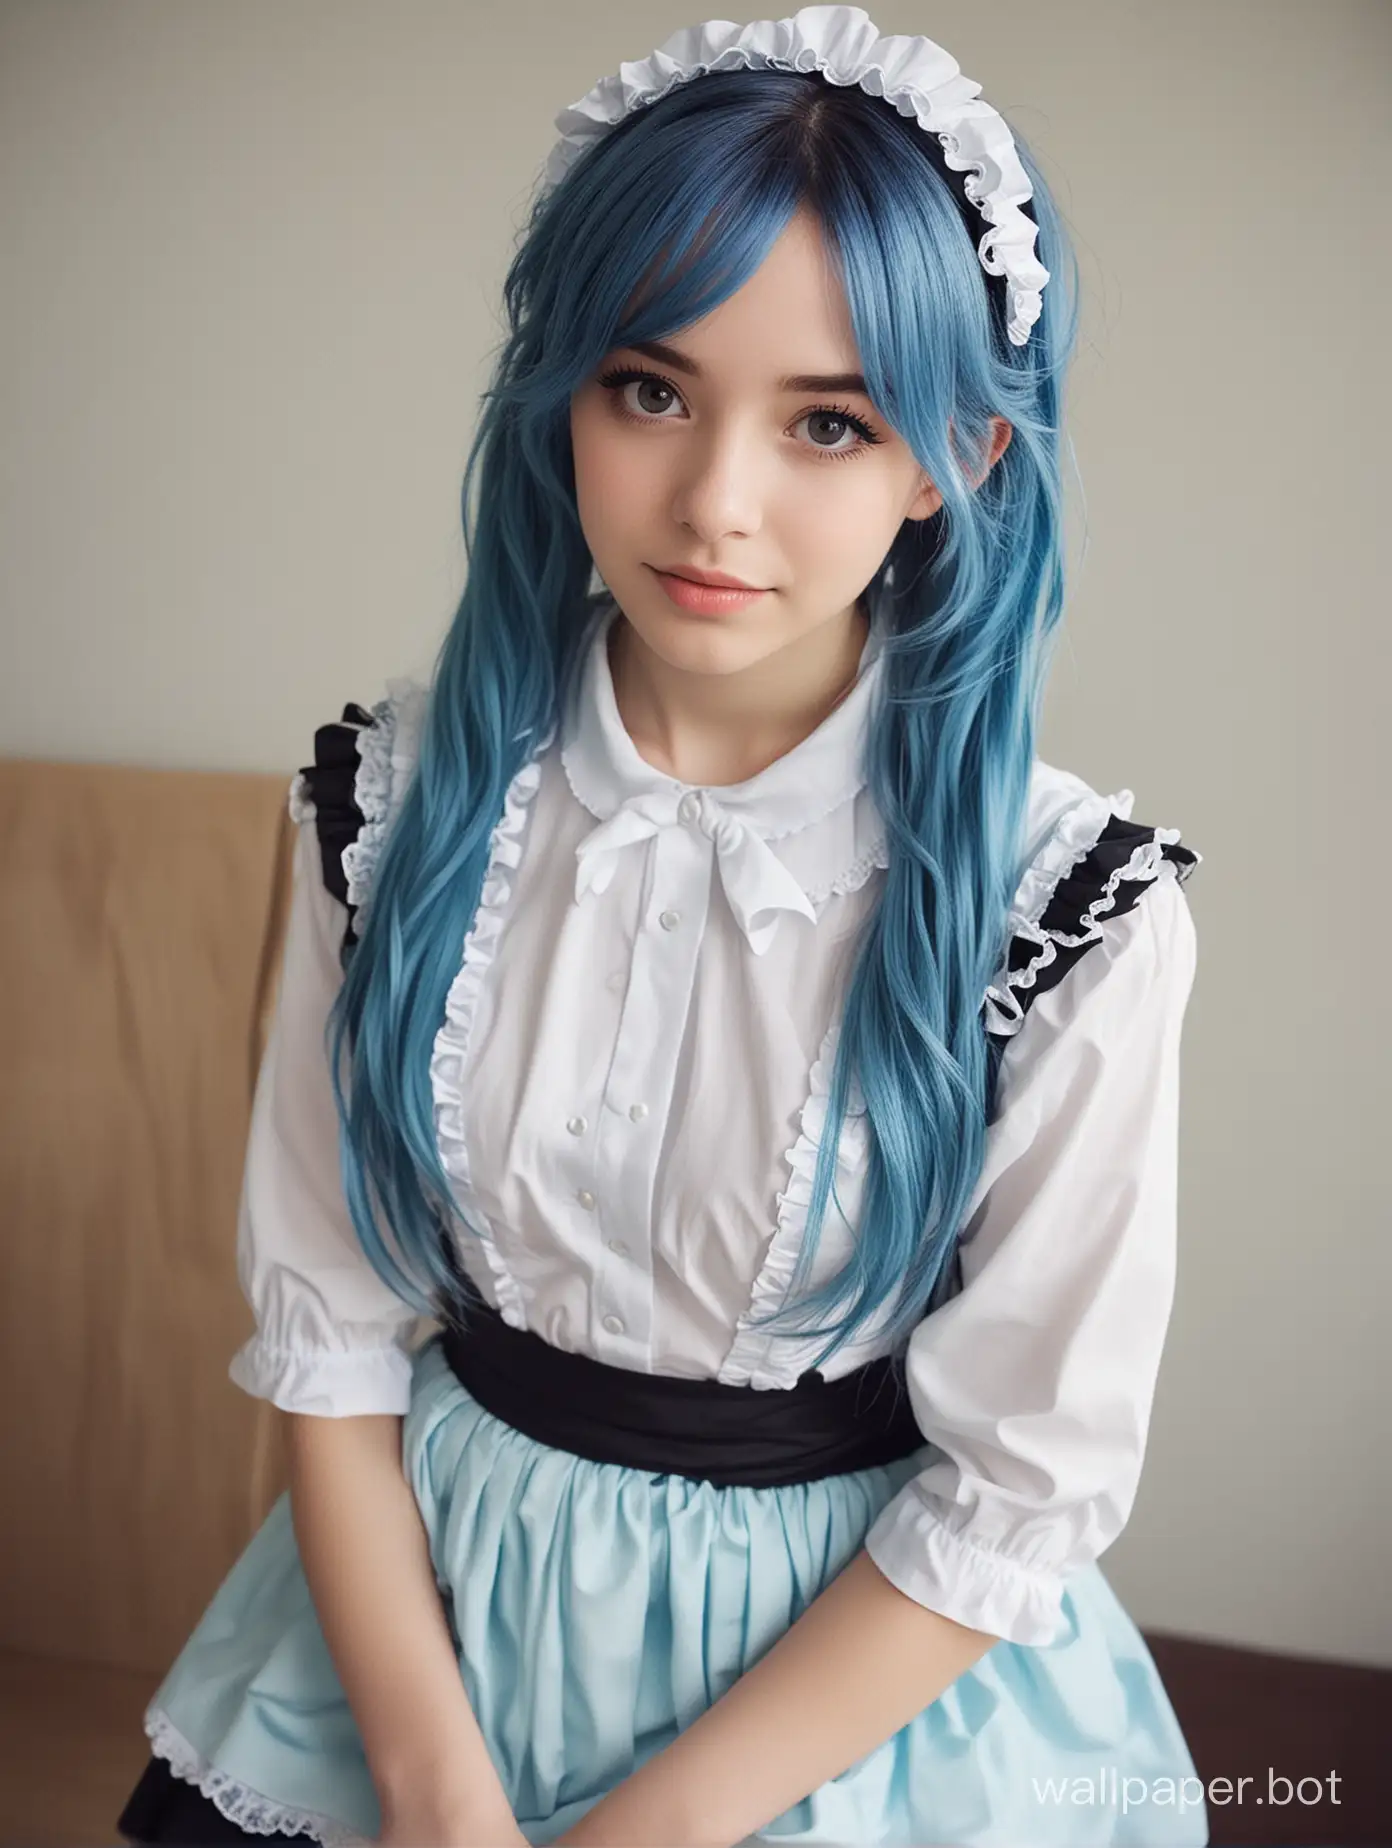 Blue hair, petite girl, cute, maid dress, beauty